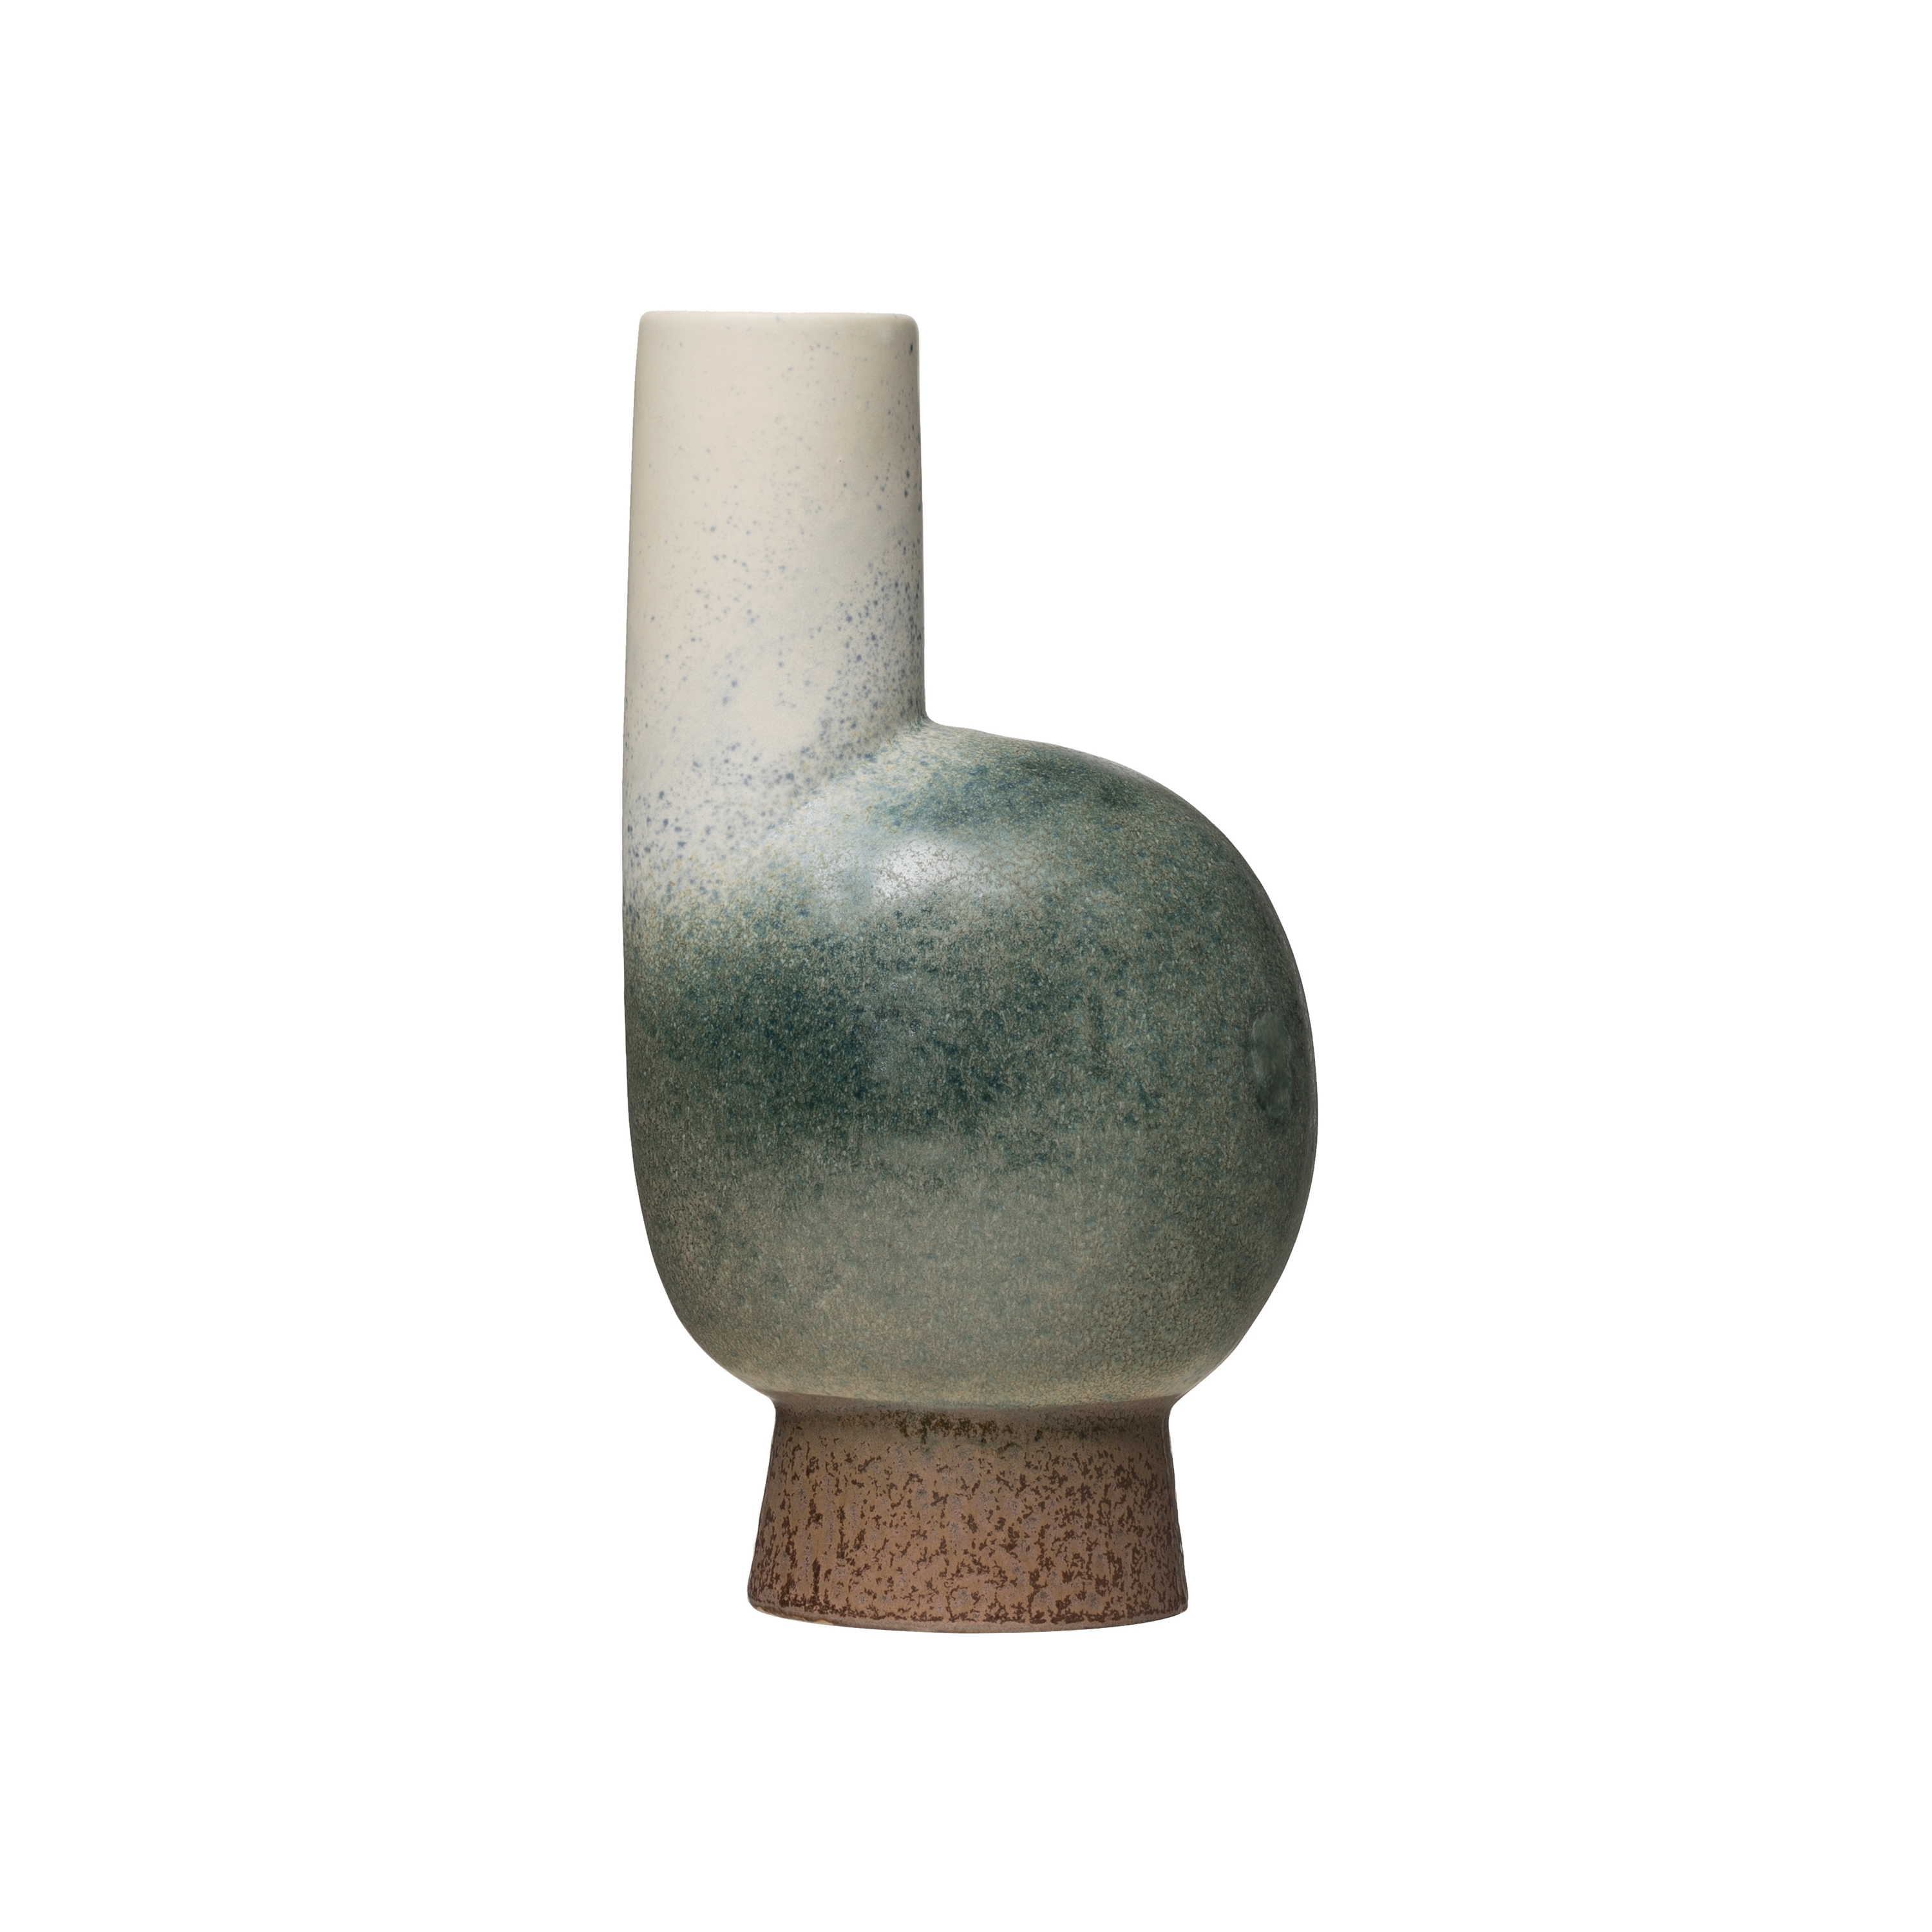 11"H Round Stoneware Vase with Chimney, Pedestal Base & Reactive Glaze Finish (Each one will vary) - Image 0